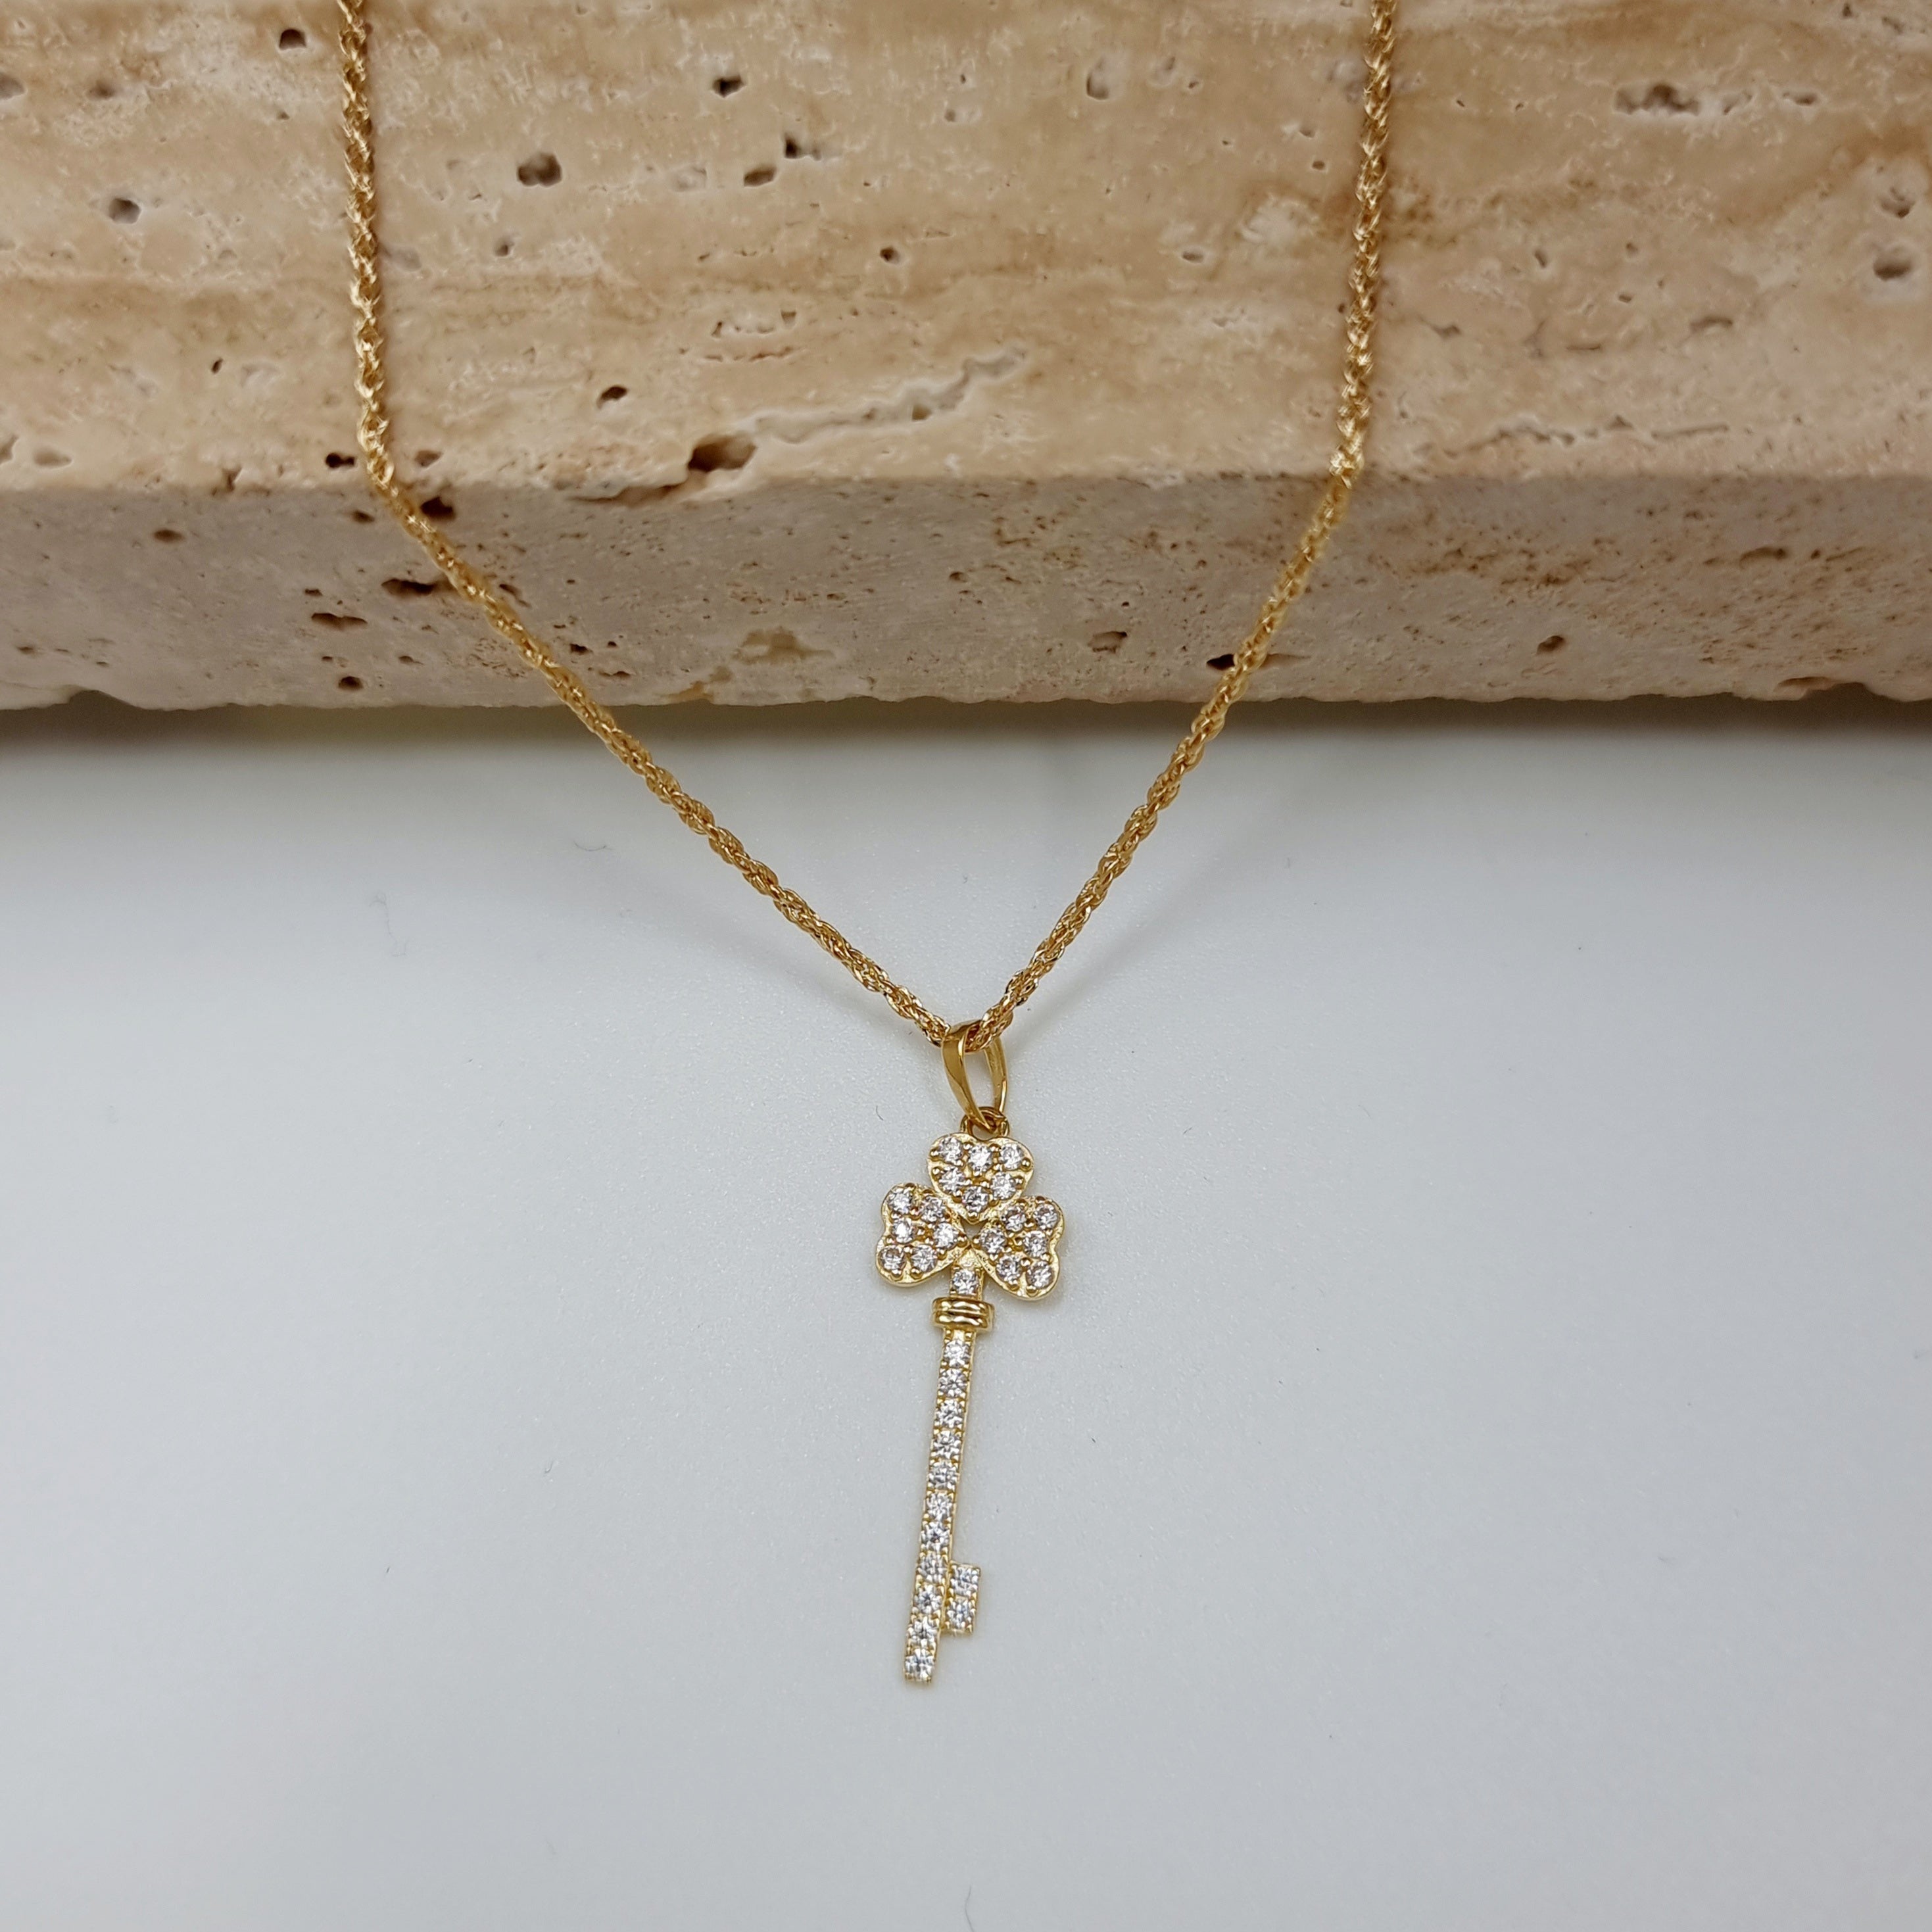 18K Pure Gold Key Design w/ Zircon Stone Necklace